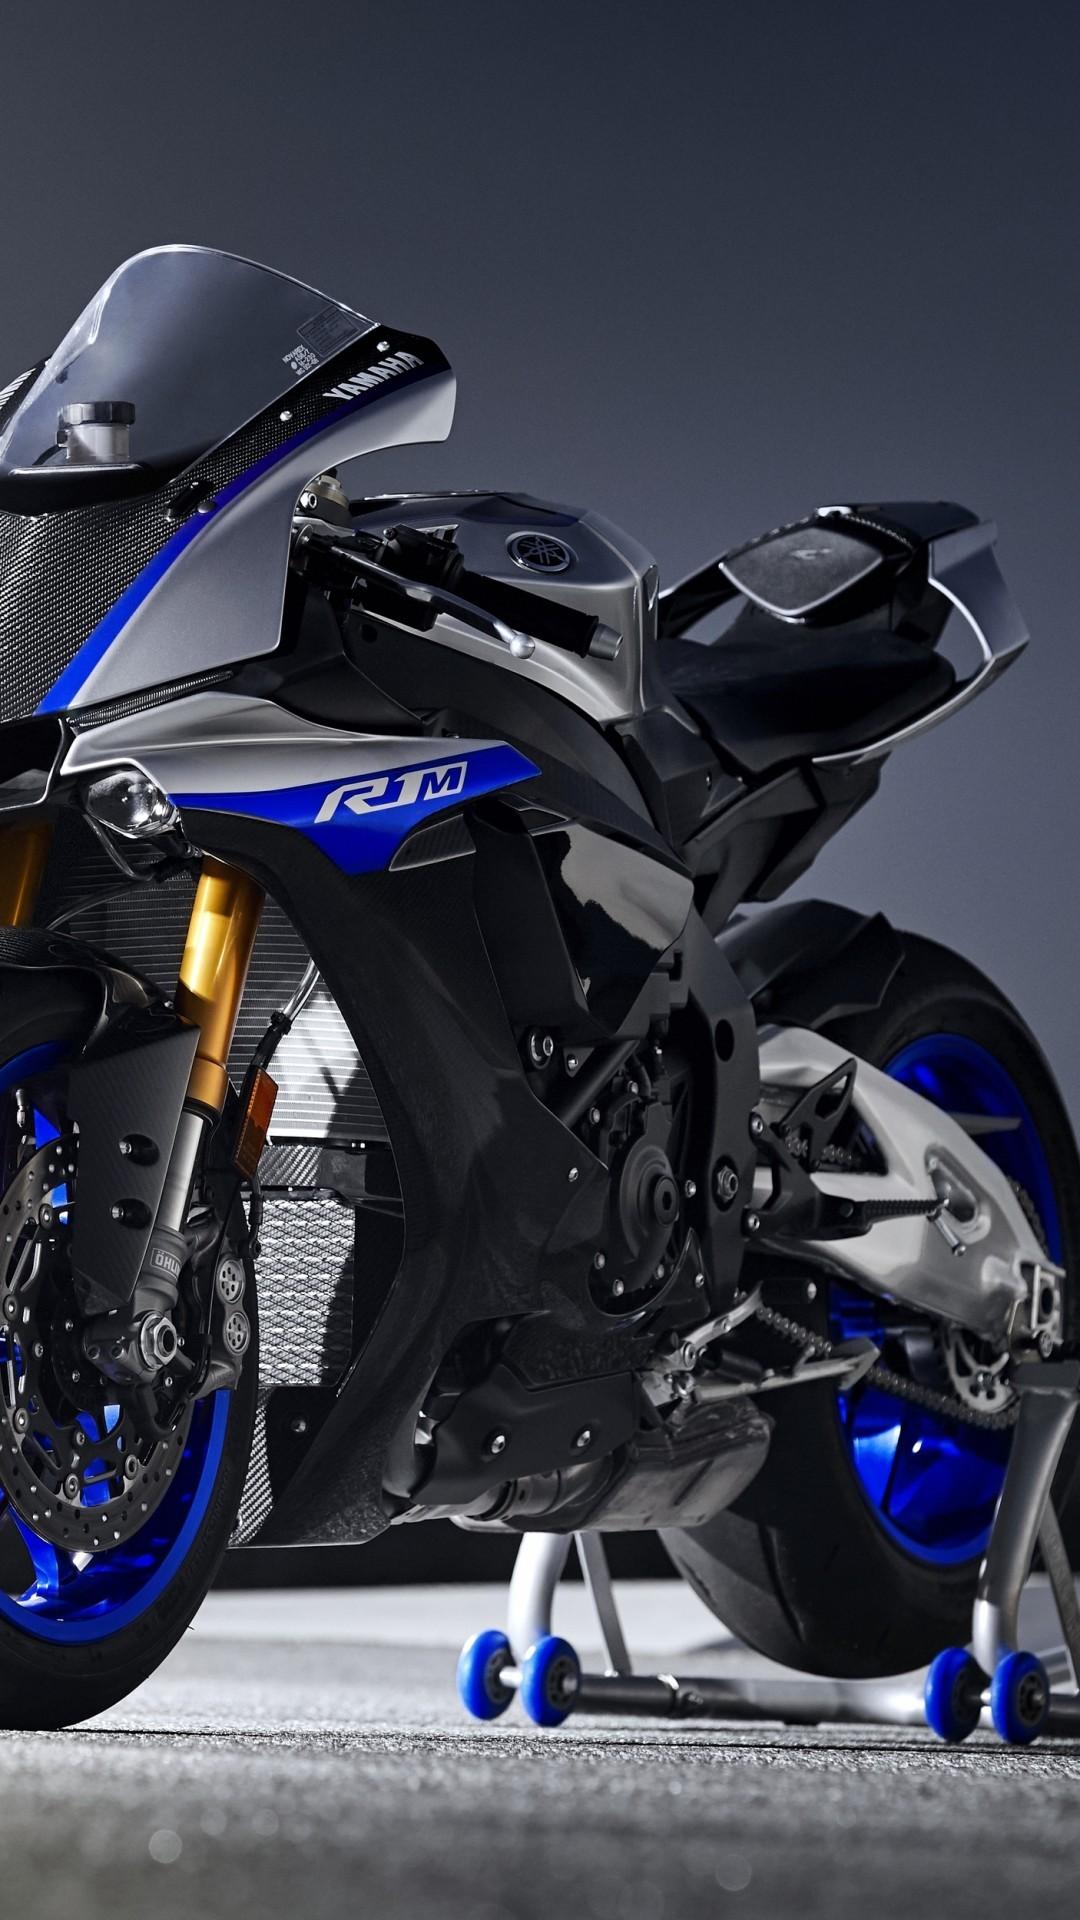 Download 1080x1920 Yamaha Yzf R1m Motorcycle